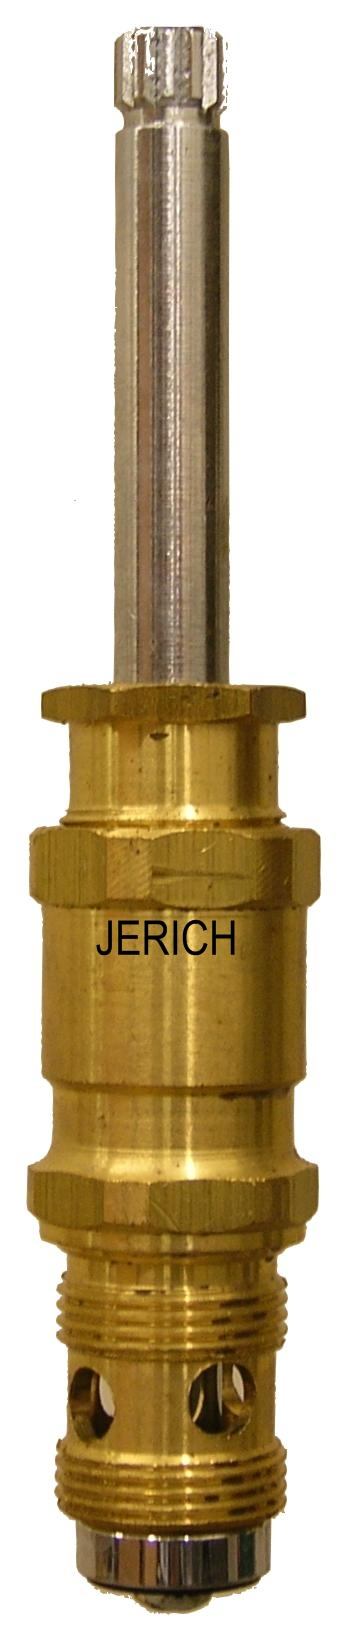 Jerich 09611 Harcraft Diverter stem unit